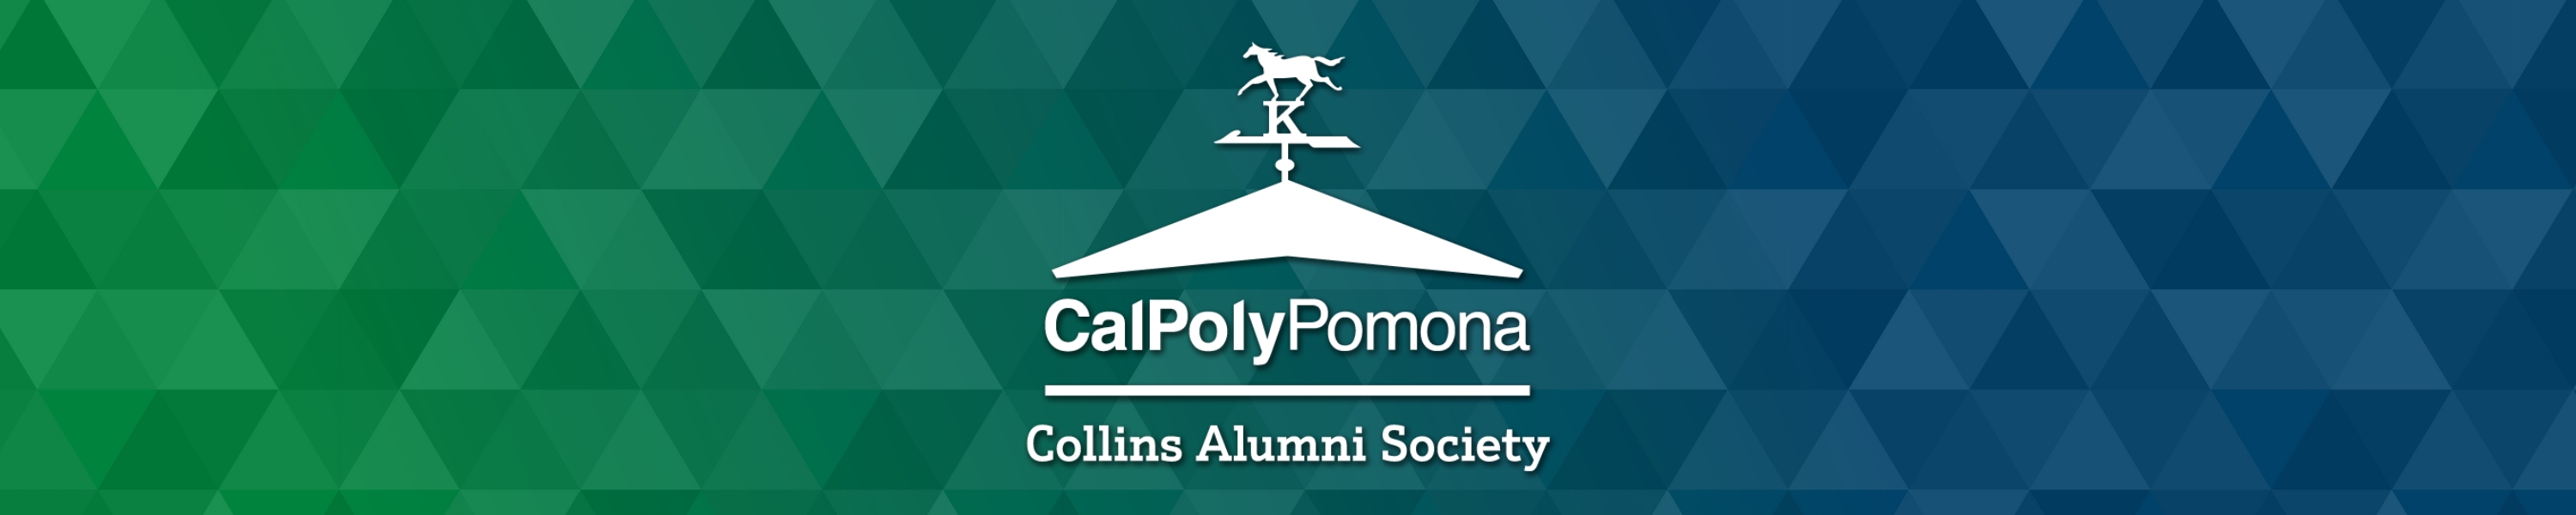 Collins Alumni Society